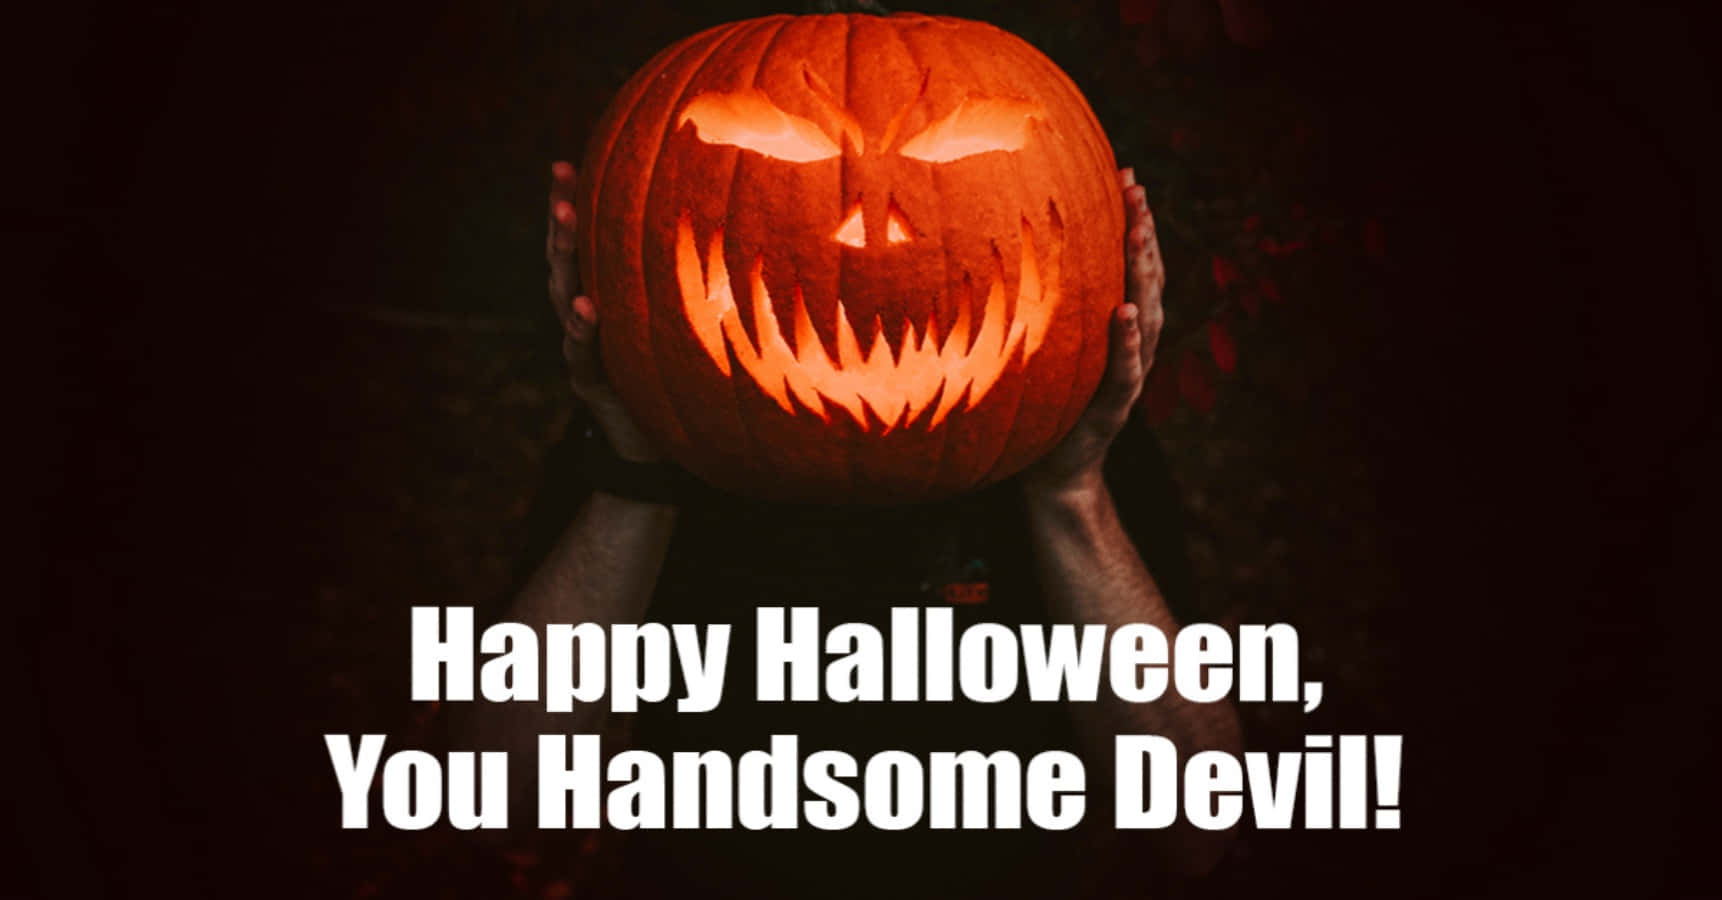 Download Funny Halloween Handsome Devil Pictures | Wallpapers.com